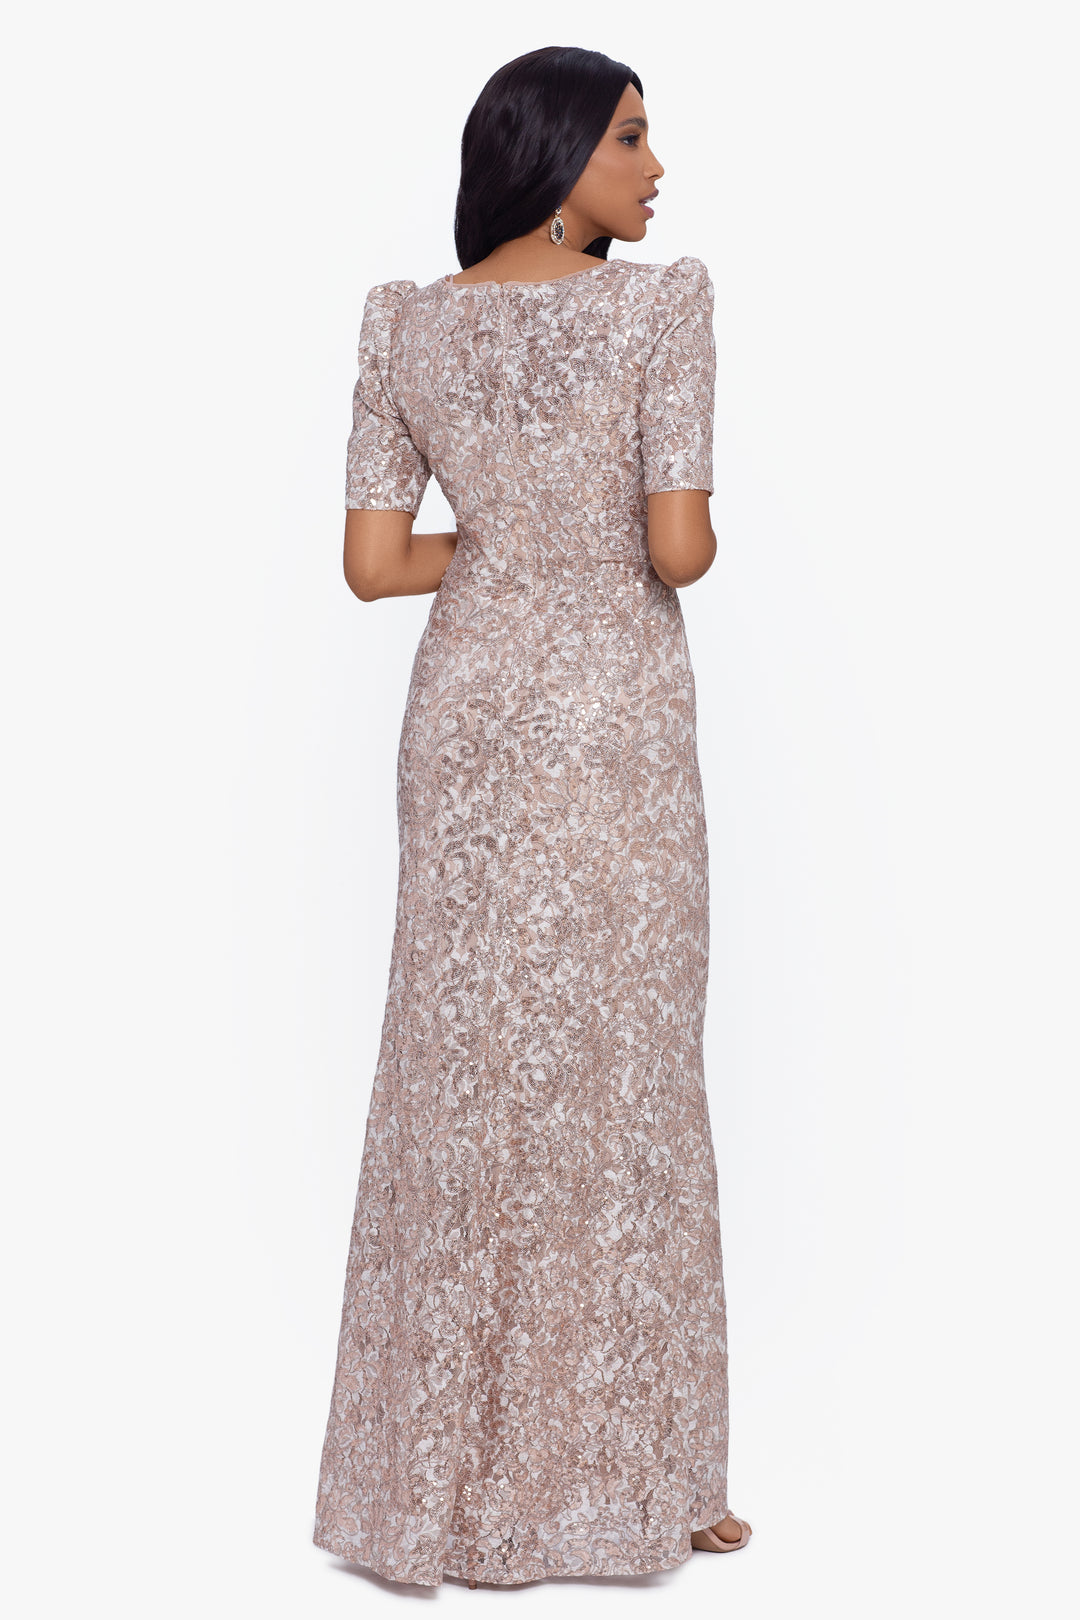 "Brielle" Long Lace Sequin Side Ruched Dress